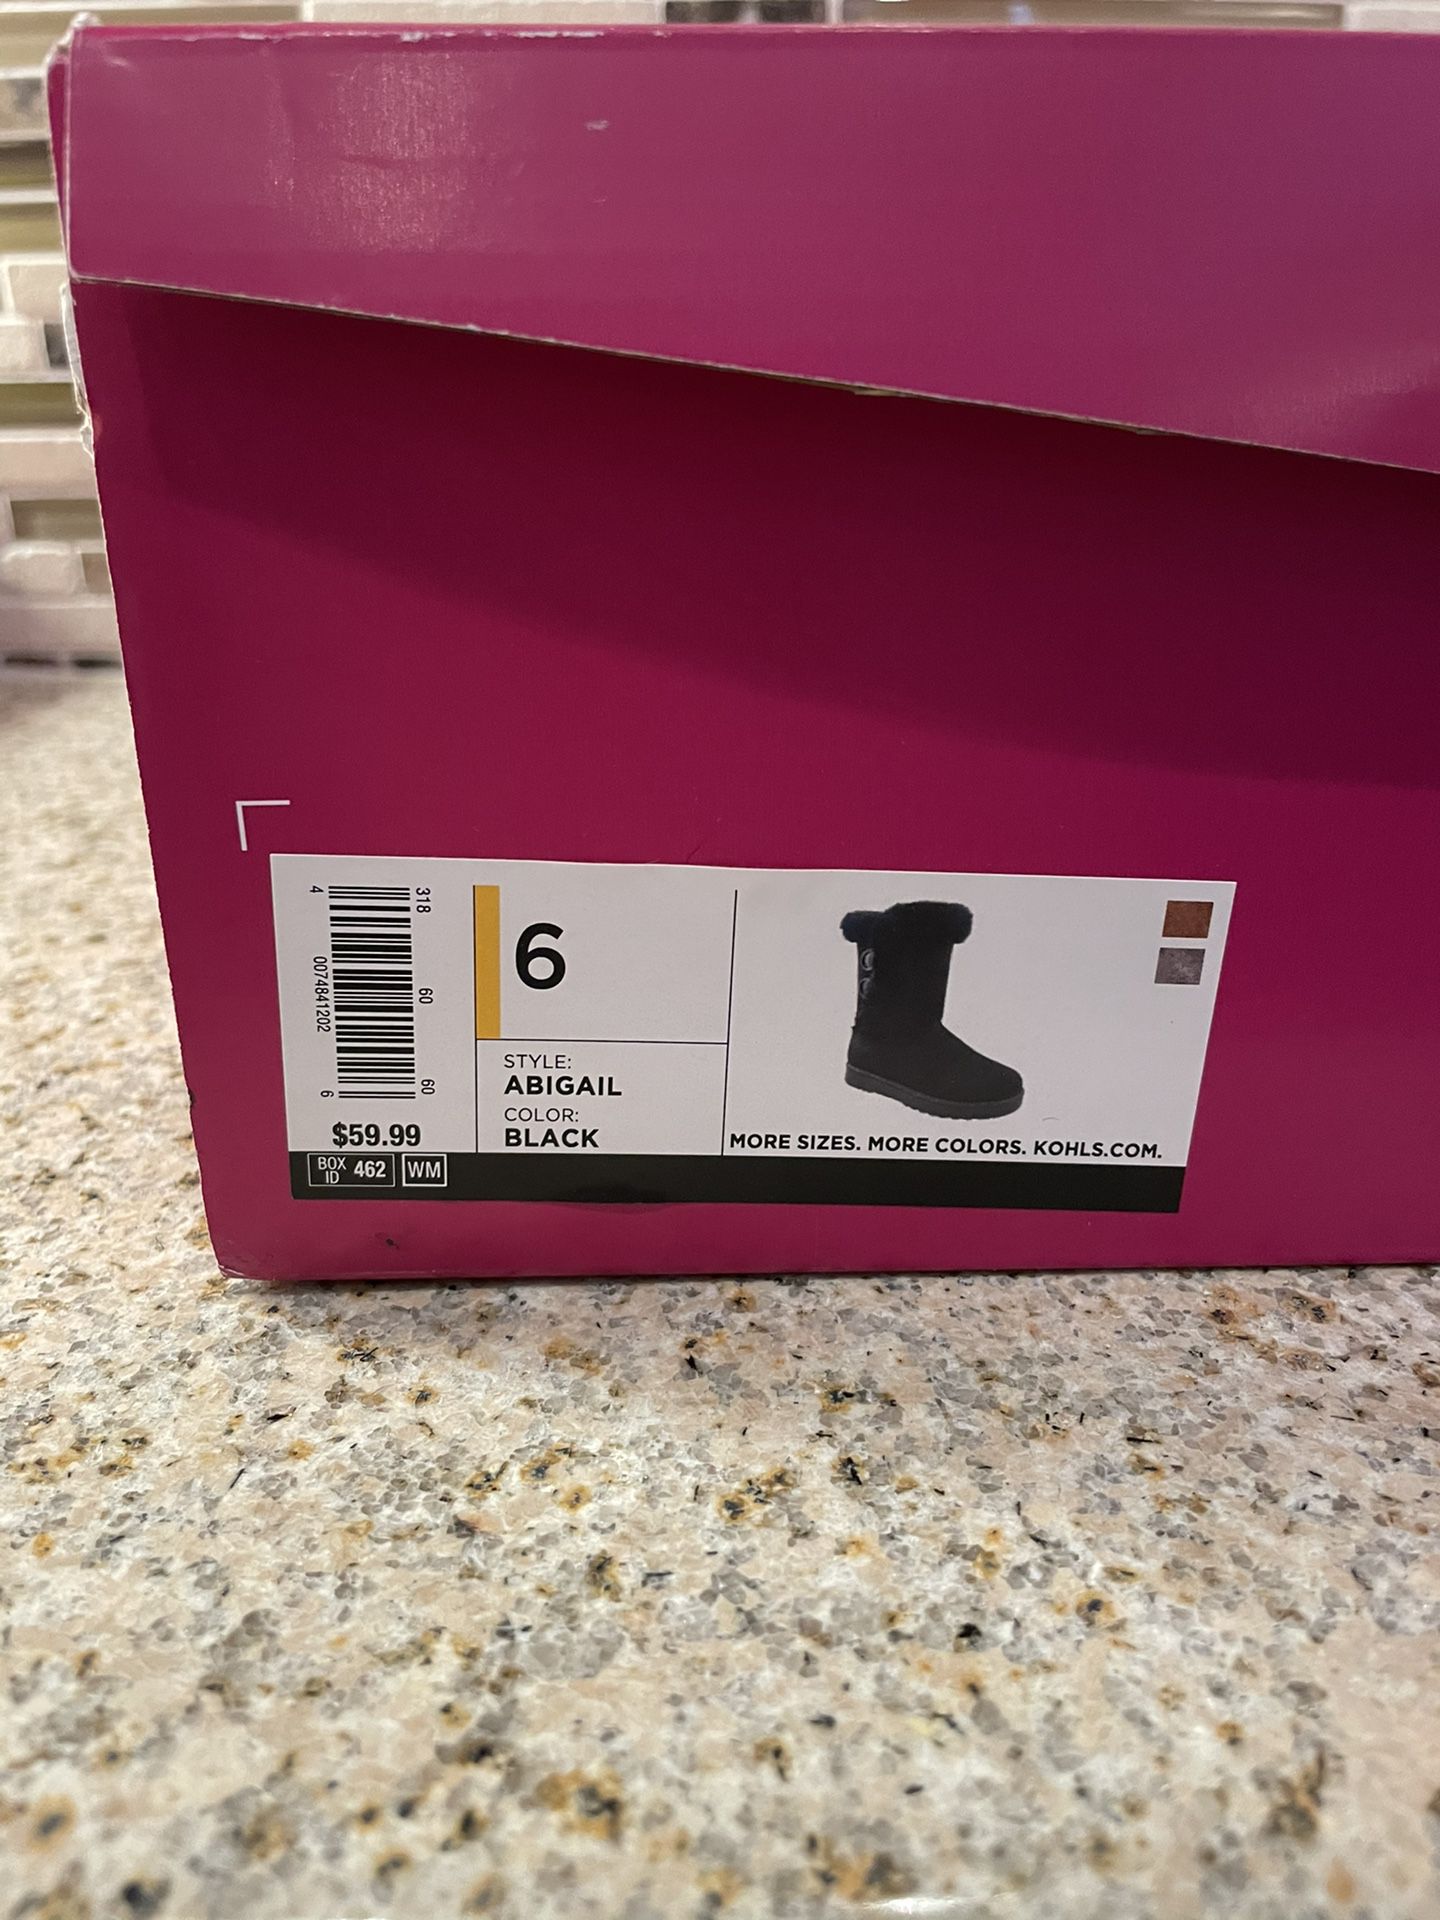 Brand New Black Boots Sz 6